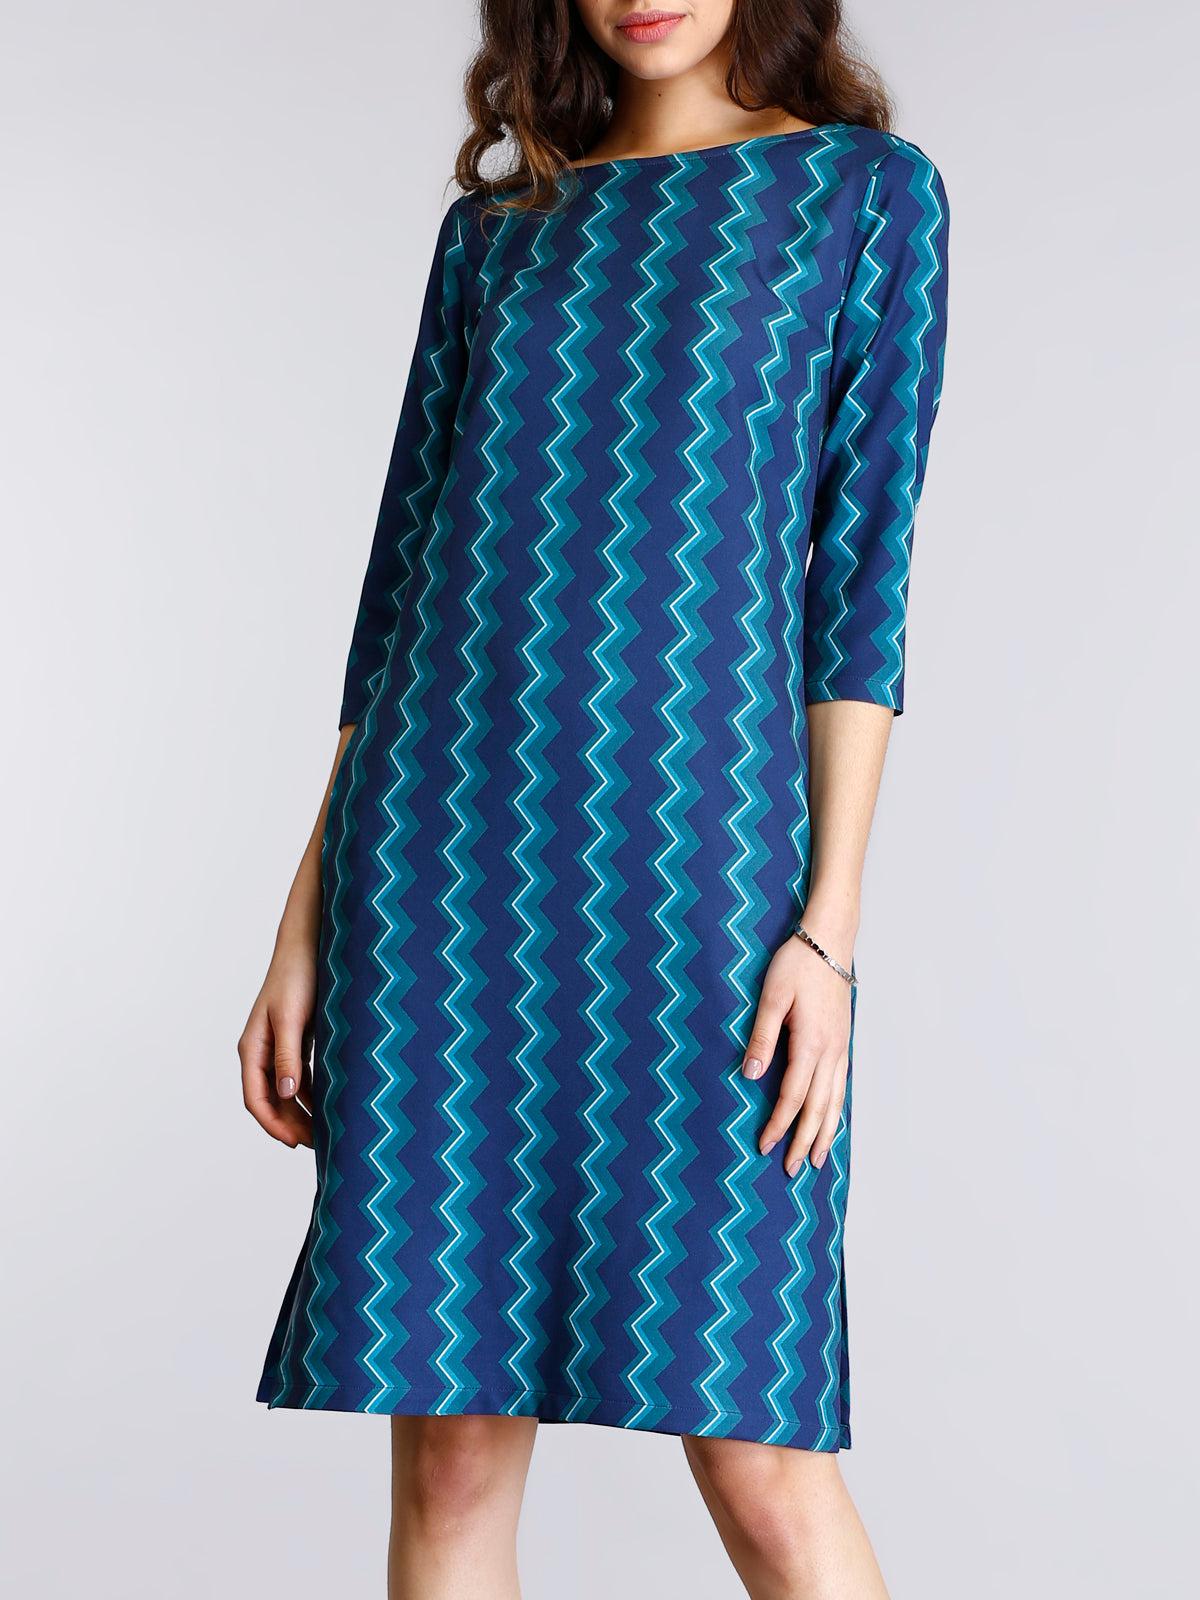 Boat Neck Geometric Print Shift Dress - Blue and Green| Formal Dresses